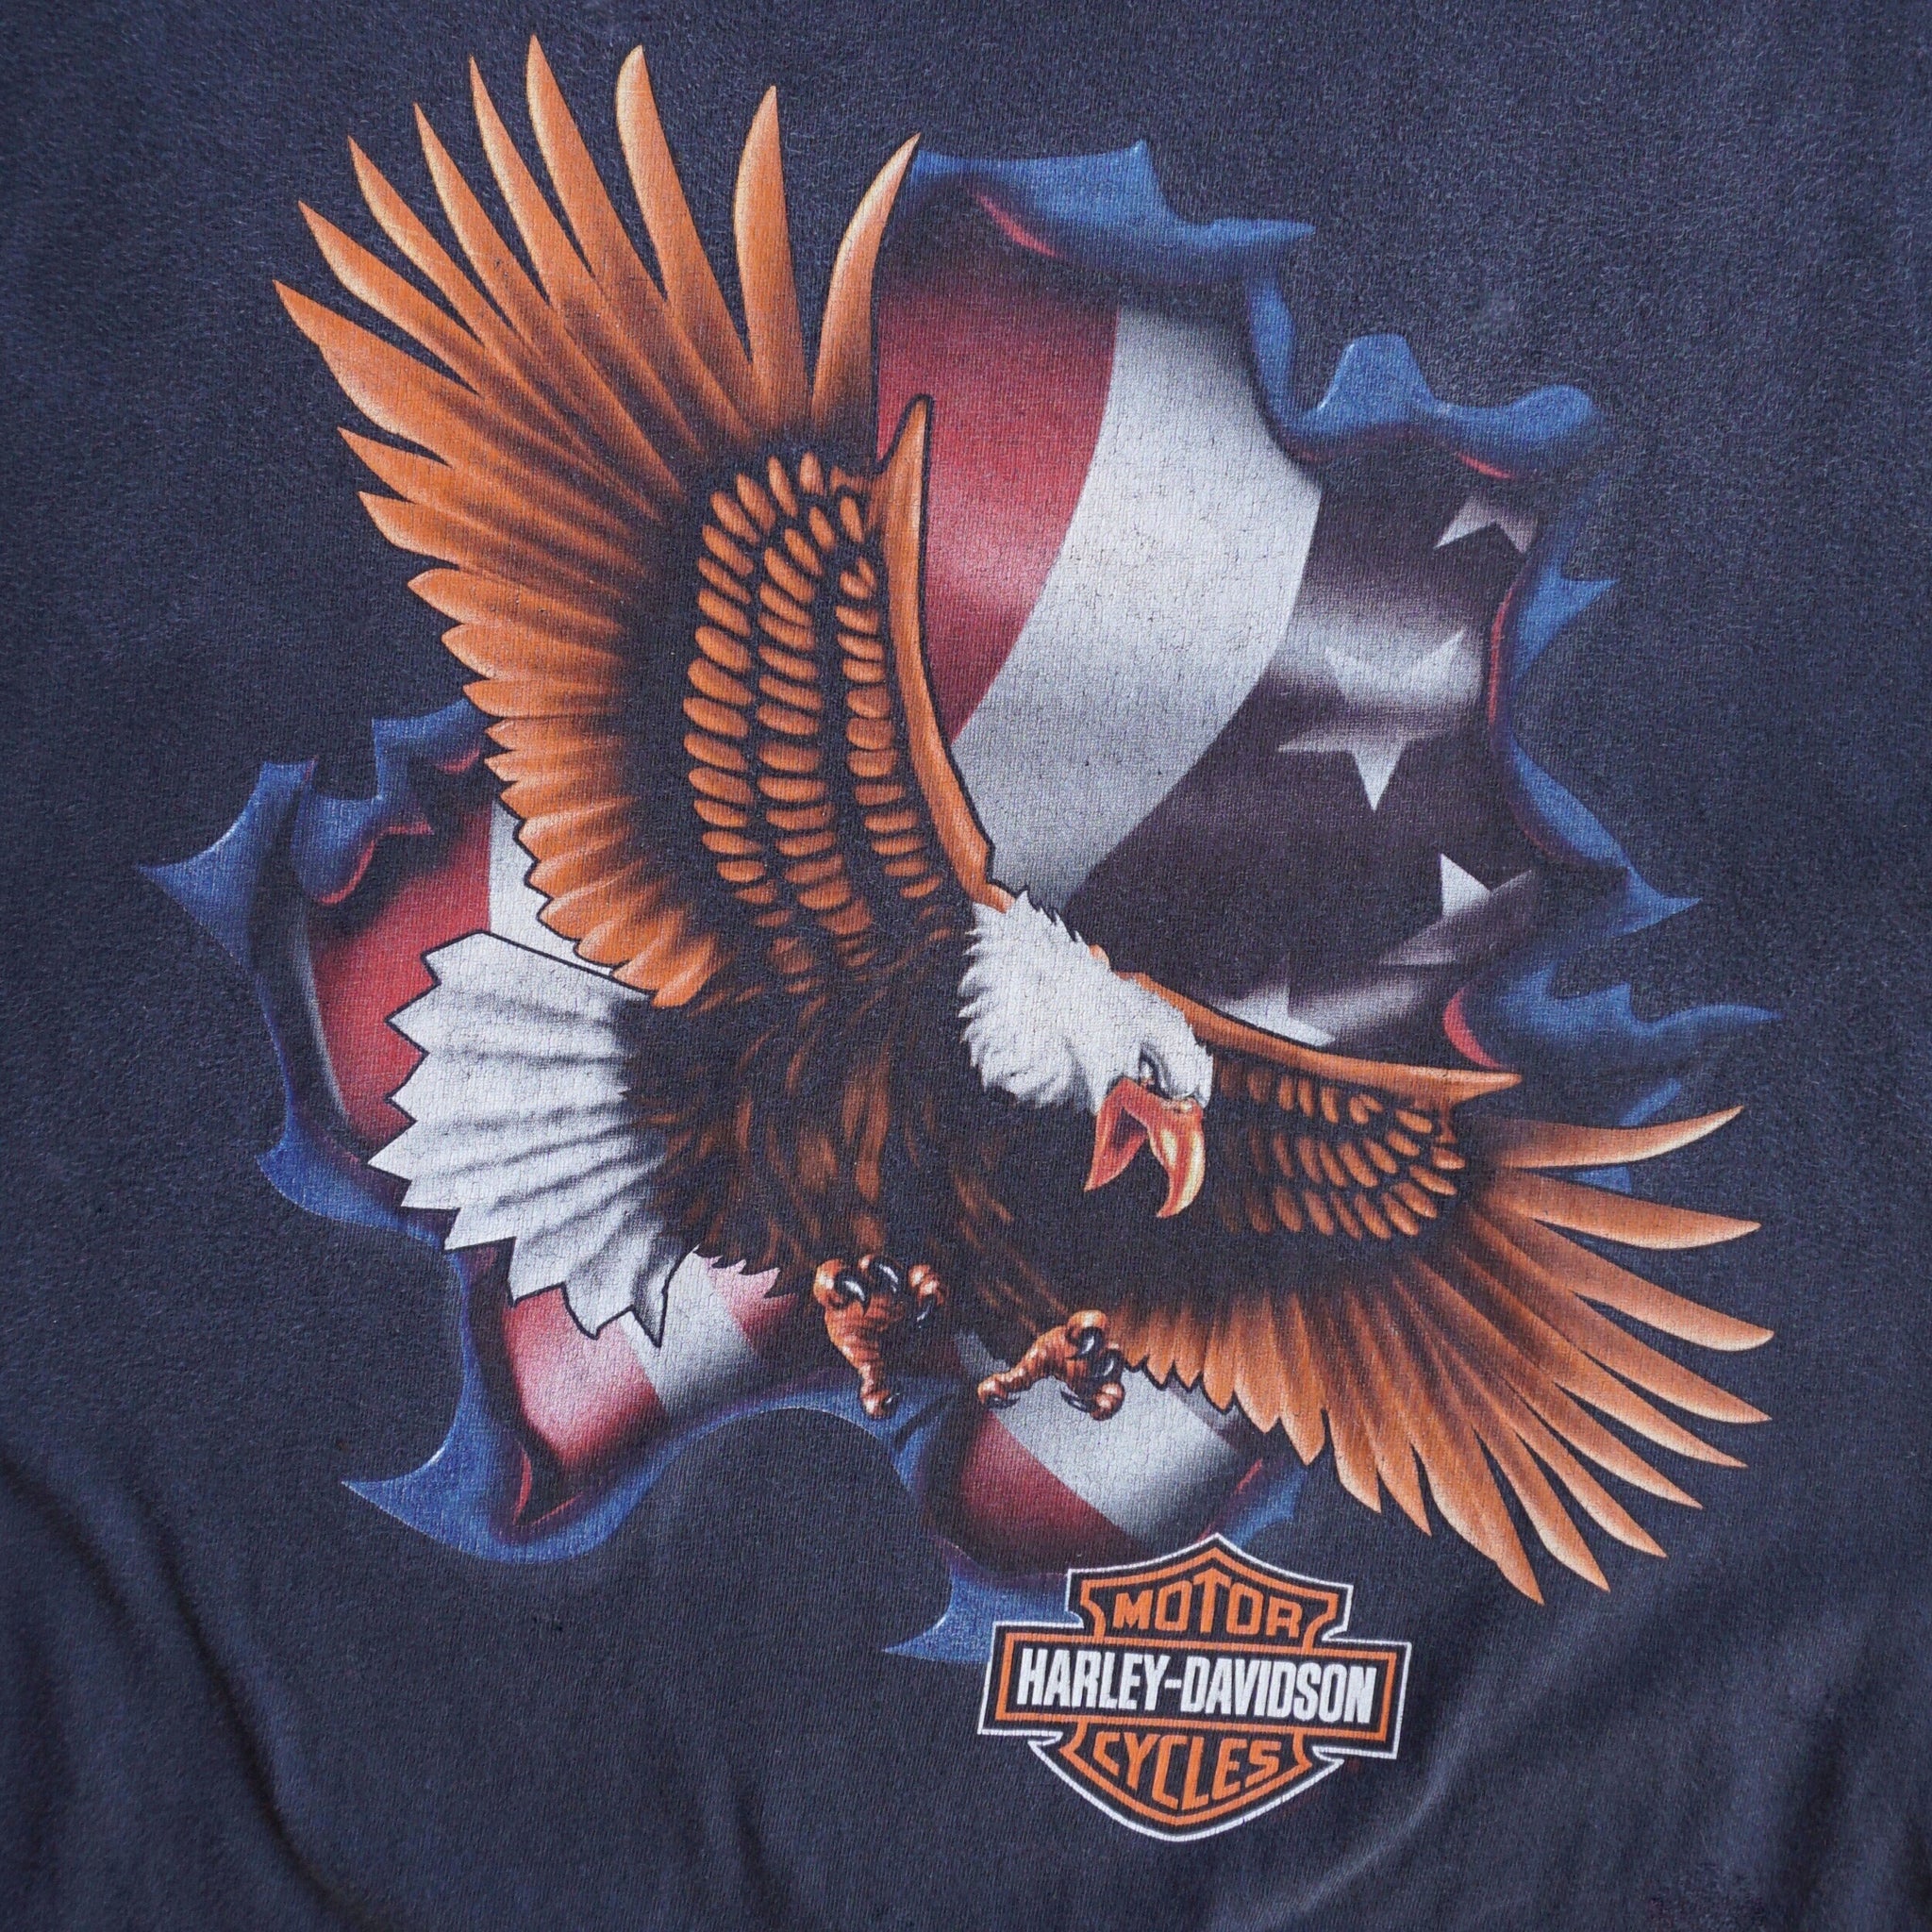 harley davidson eagle logo american flag